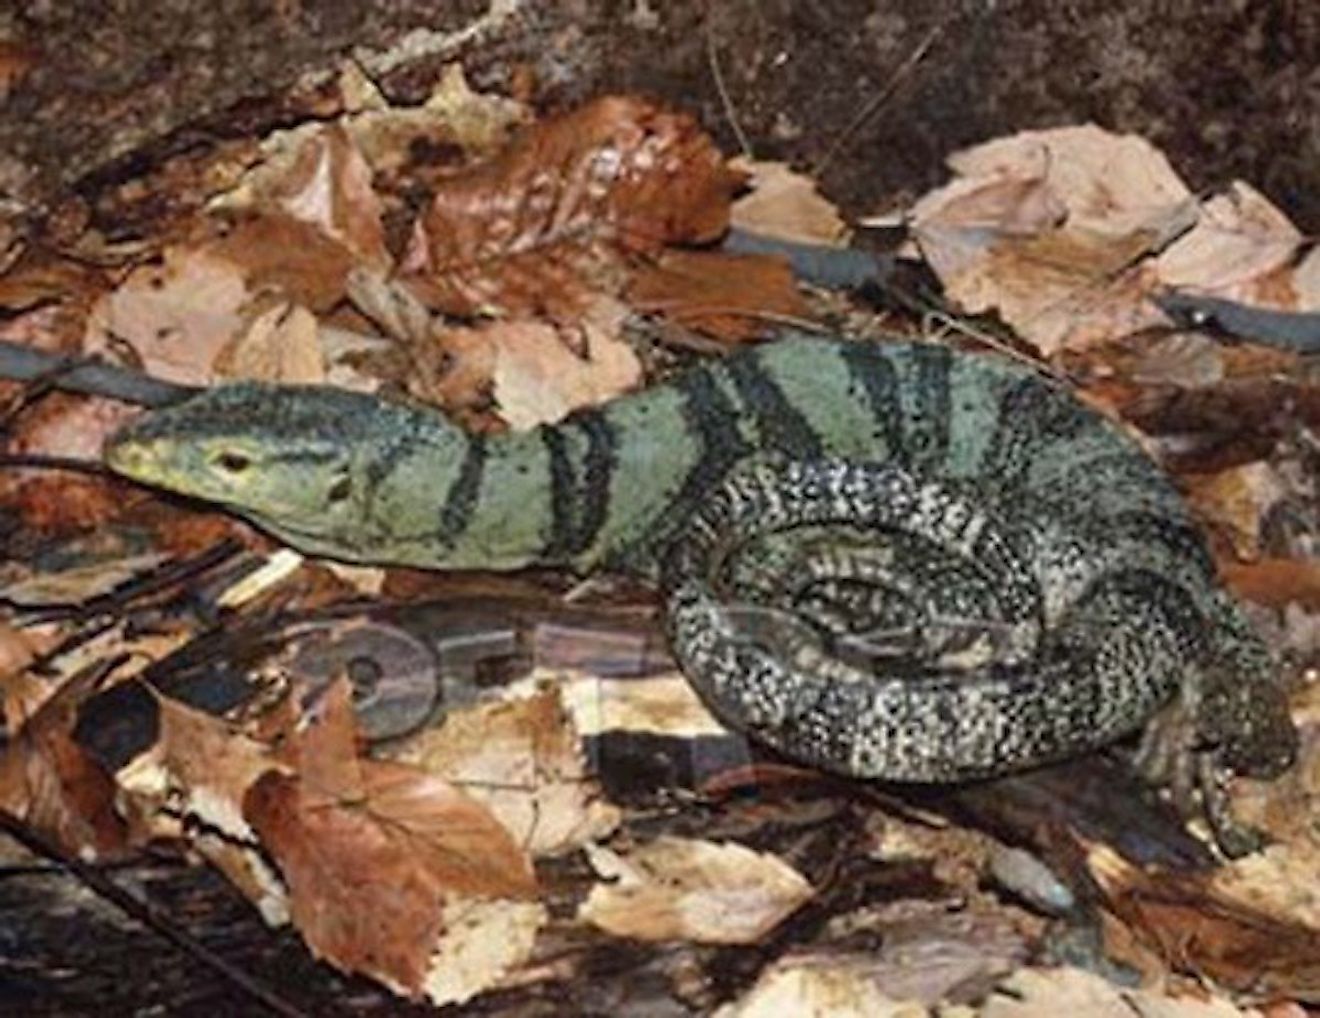 Gray’s Monitor Lizard. Image credit: www.worldlifeexpectancy.com